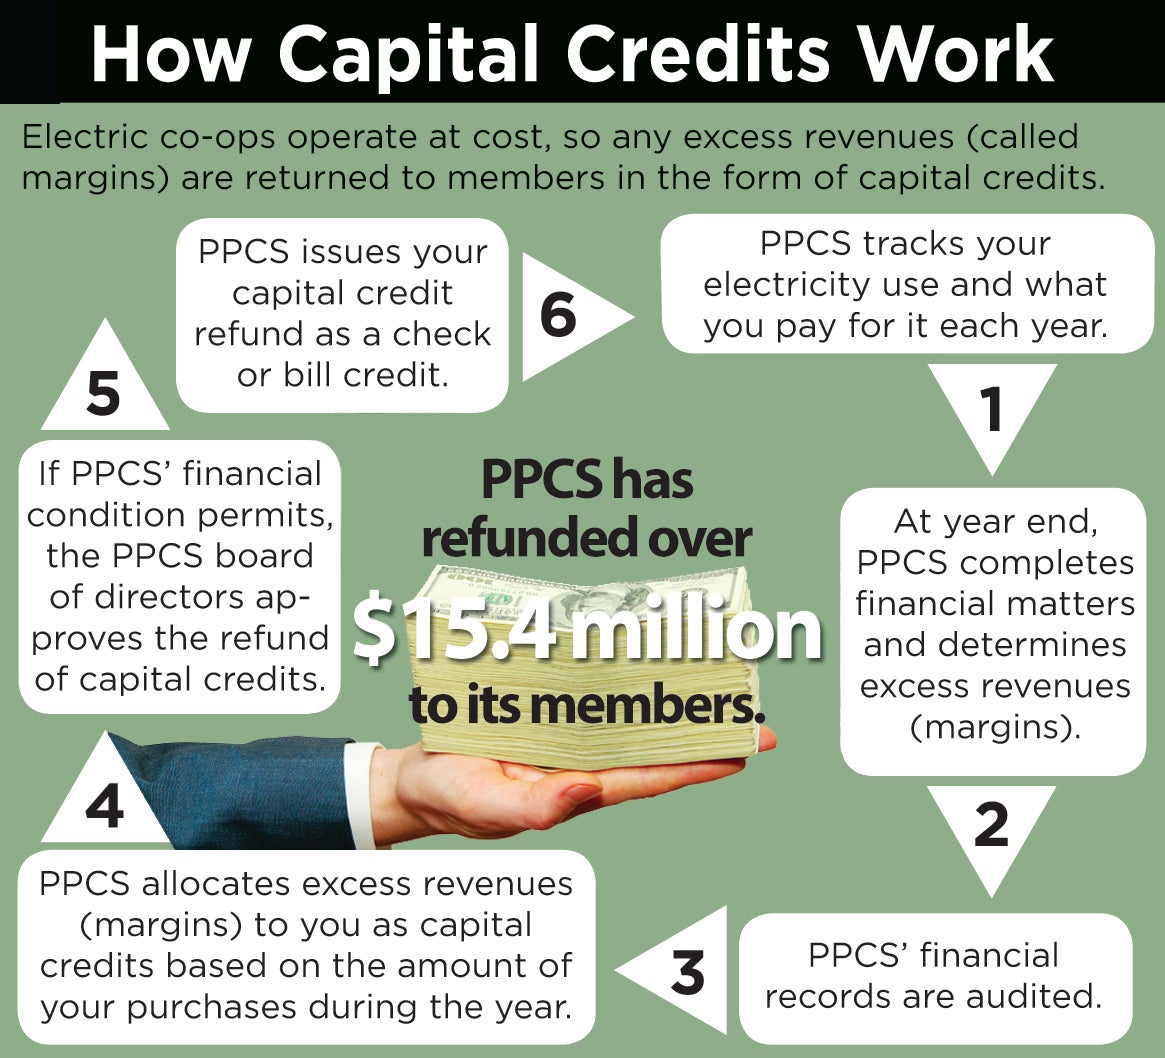 How capital credits work